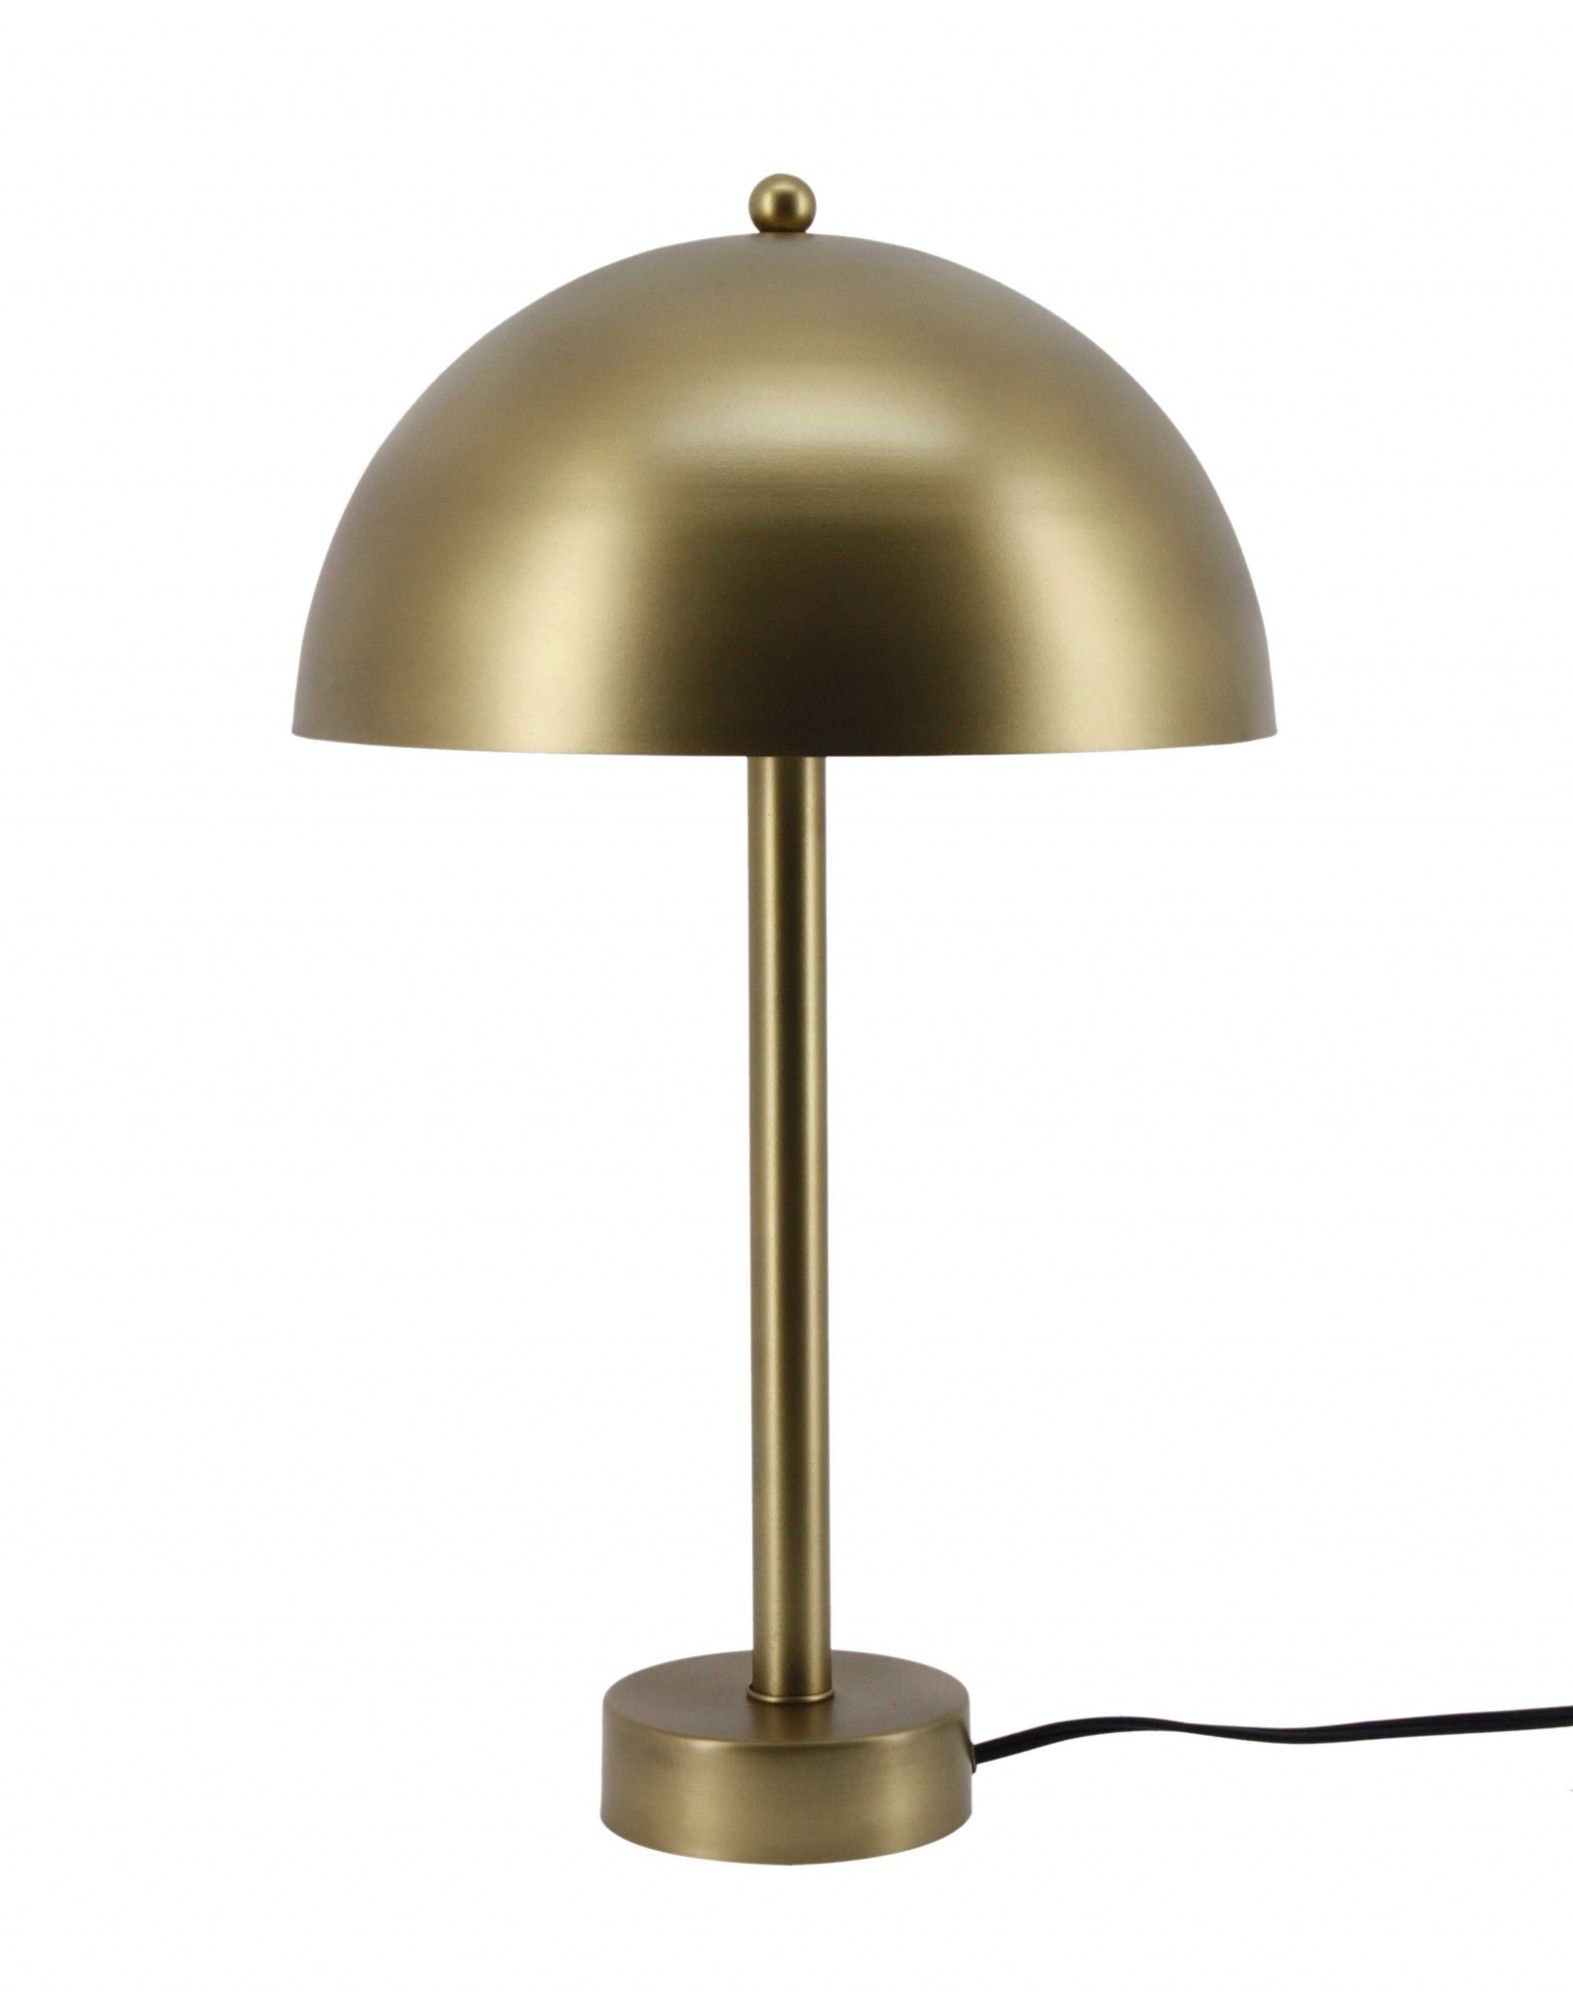 12" X 12" X 20" Antique Brass Galvanized Iron Table Lamp